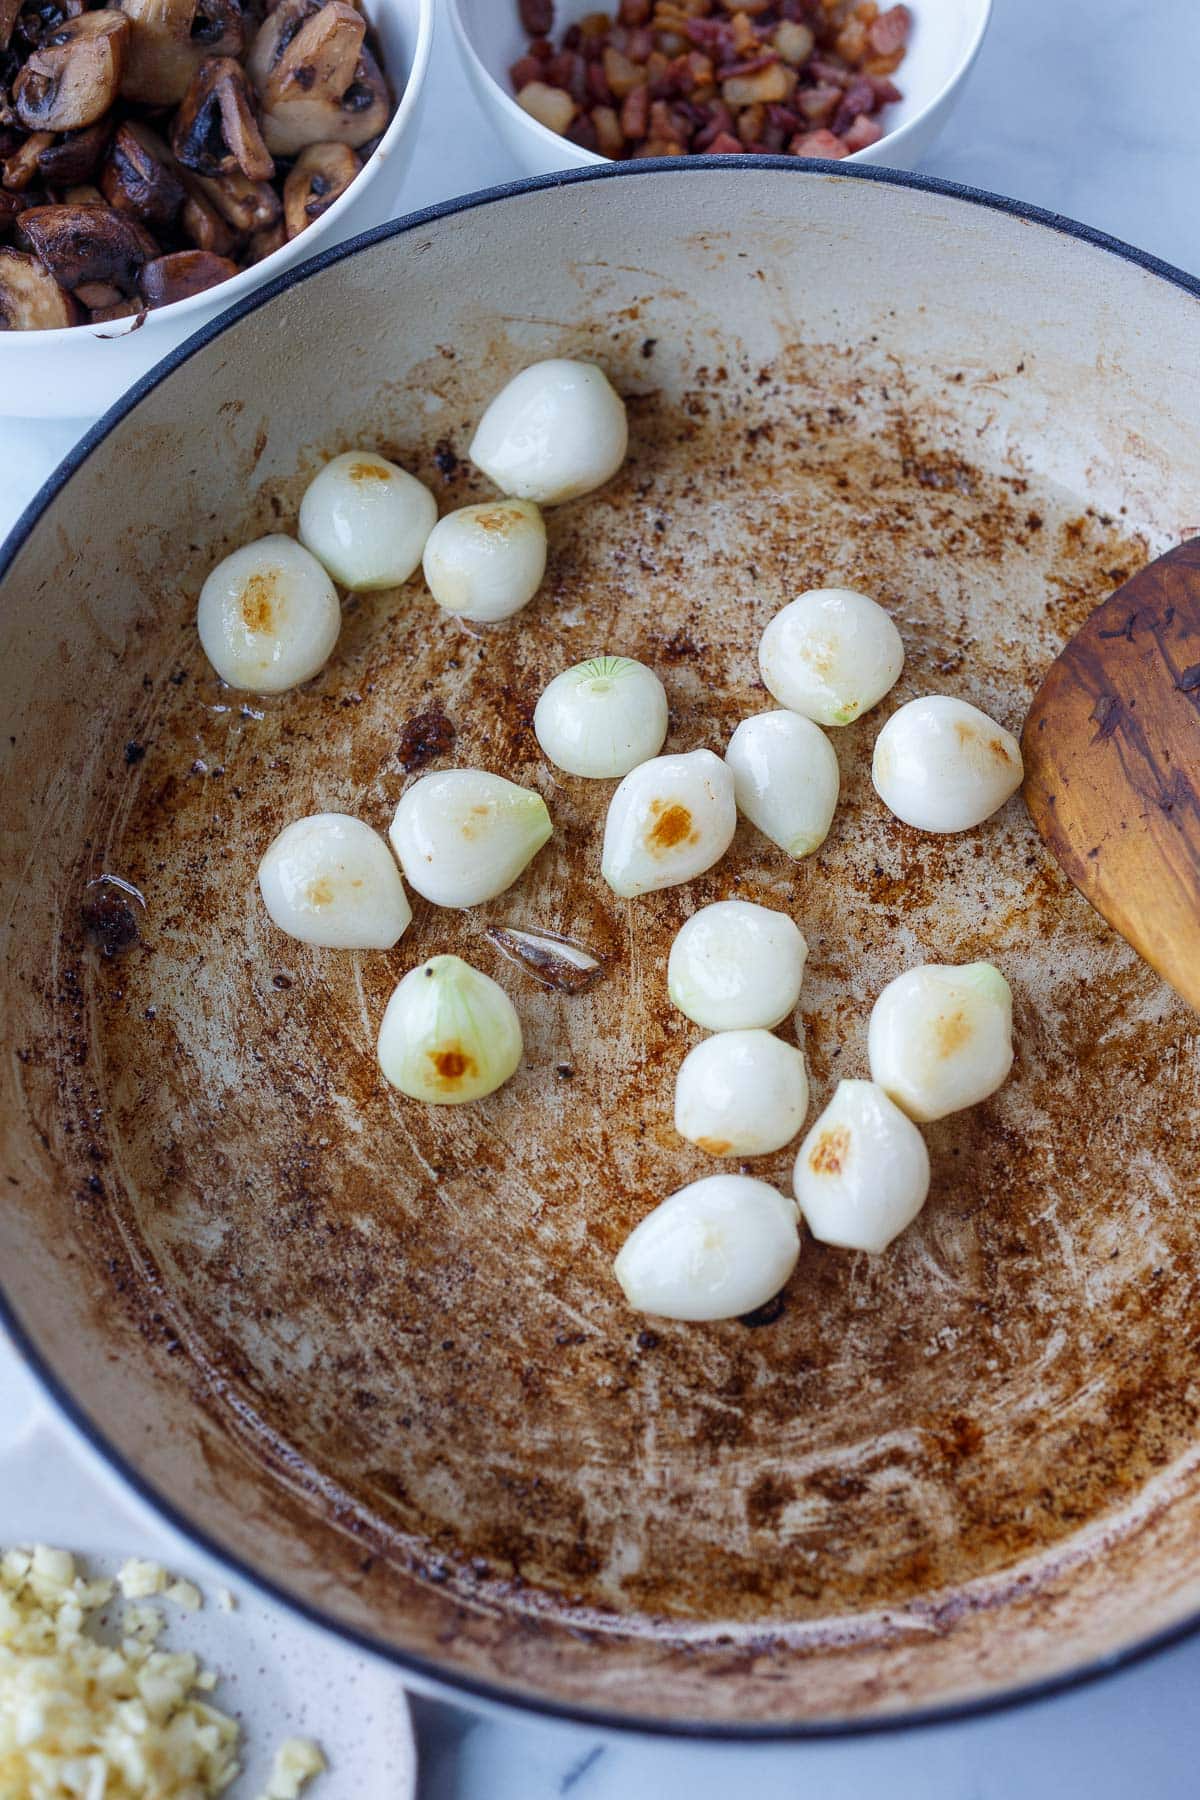 pearl onions sautéing in pan.